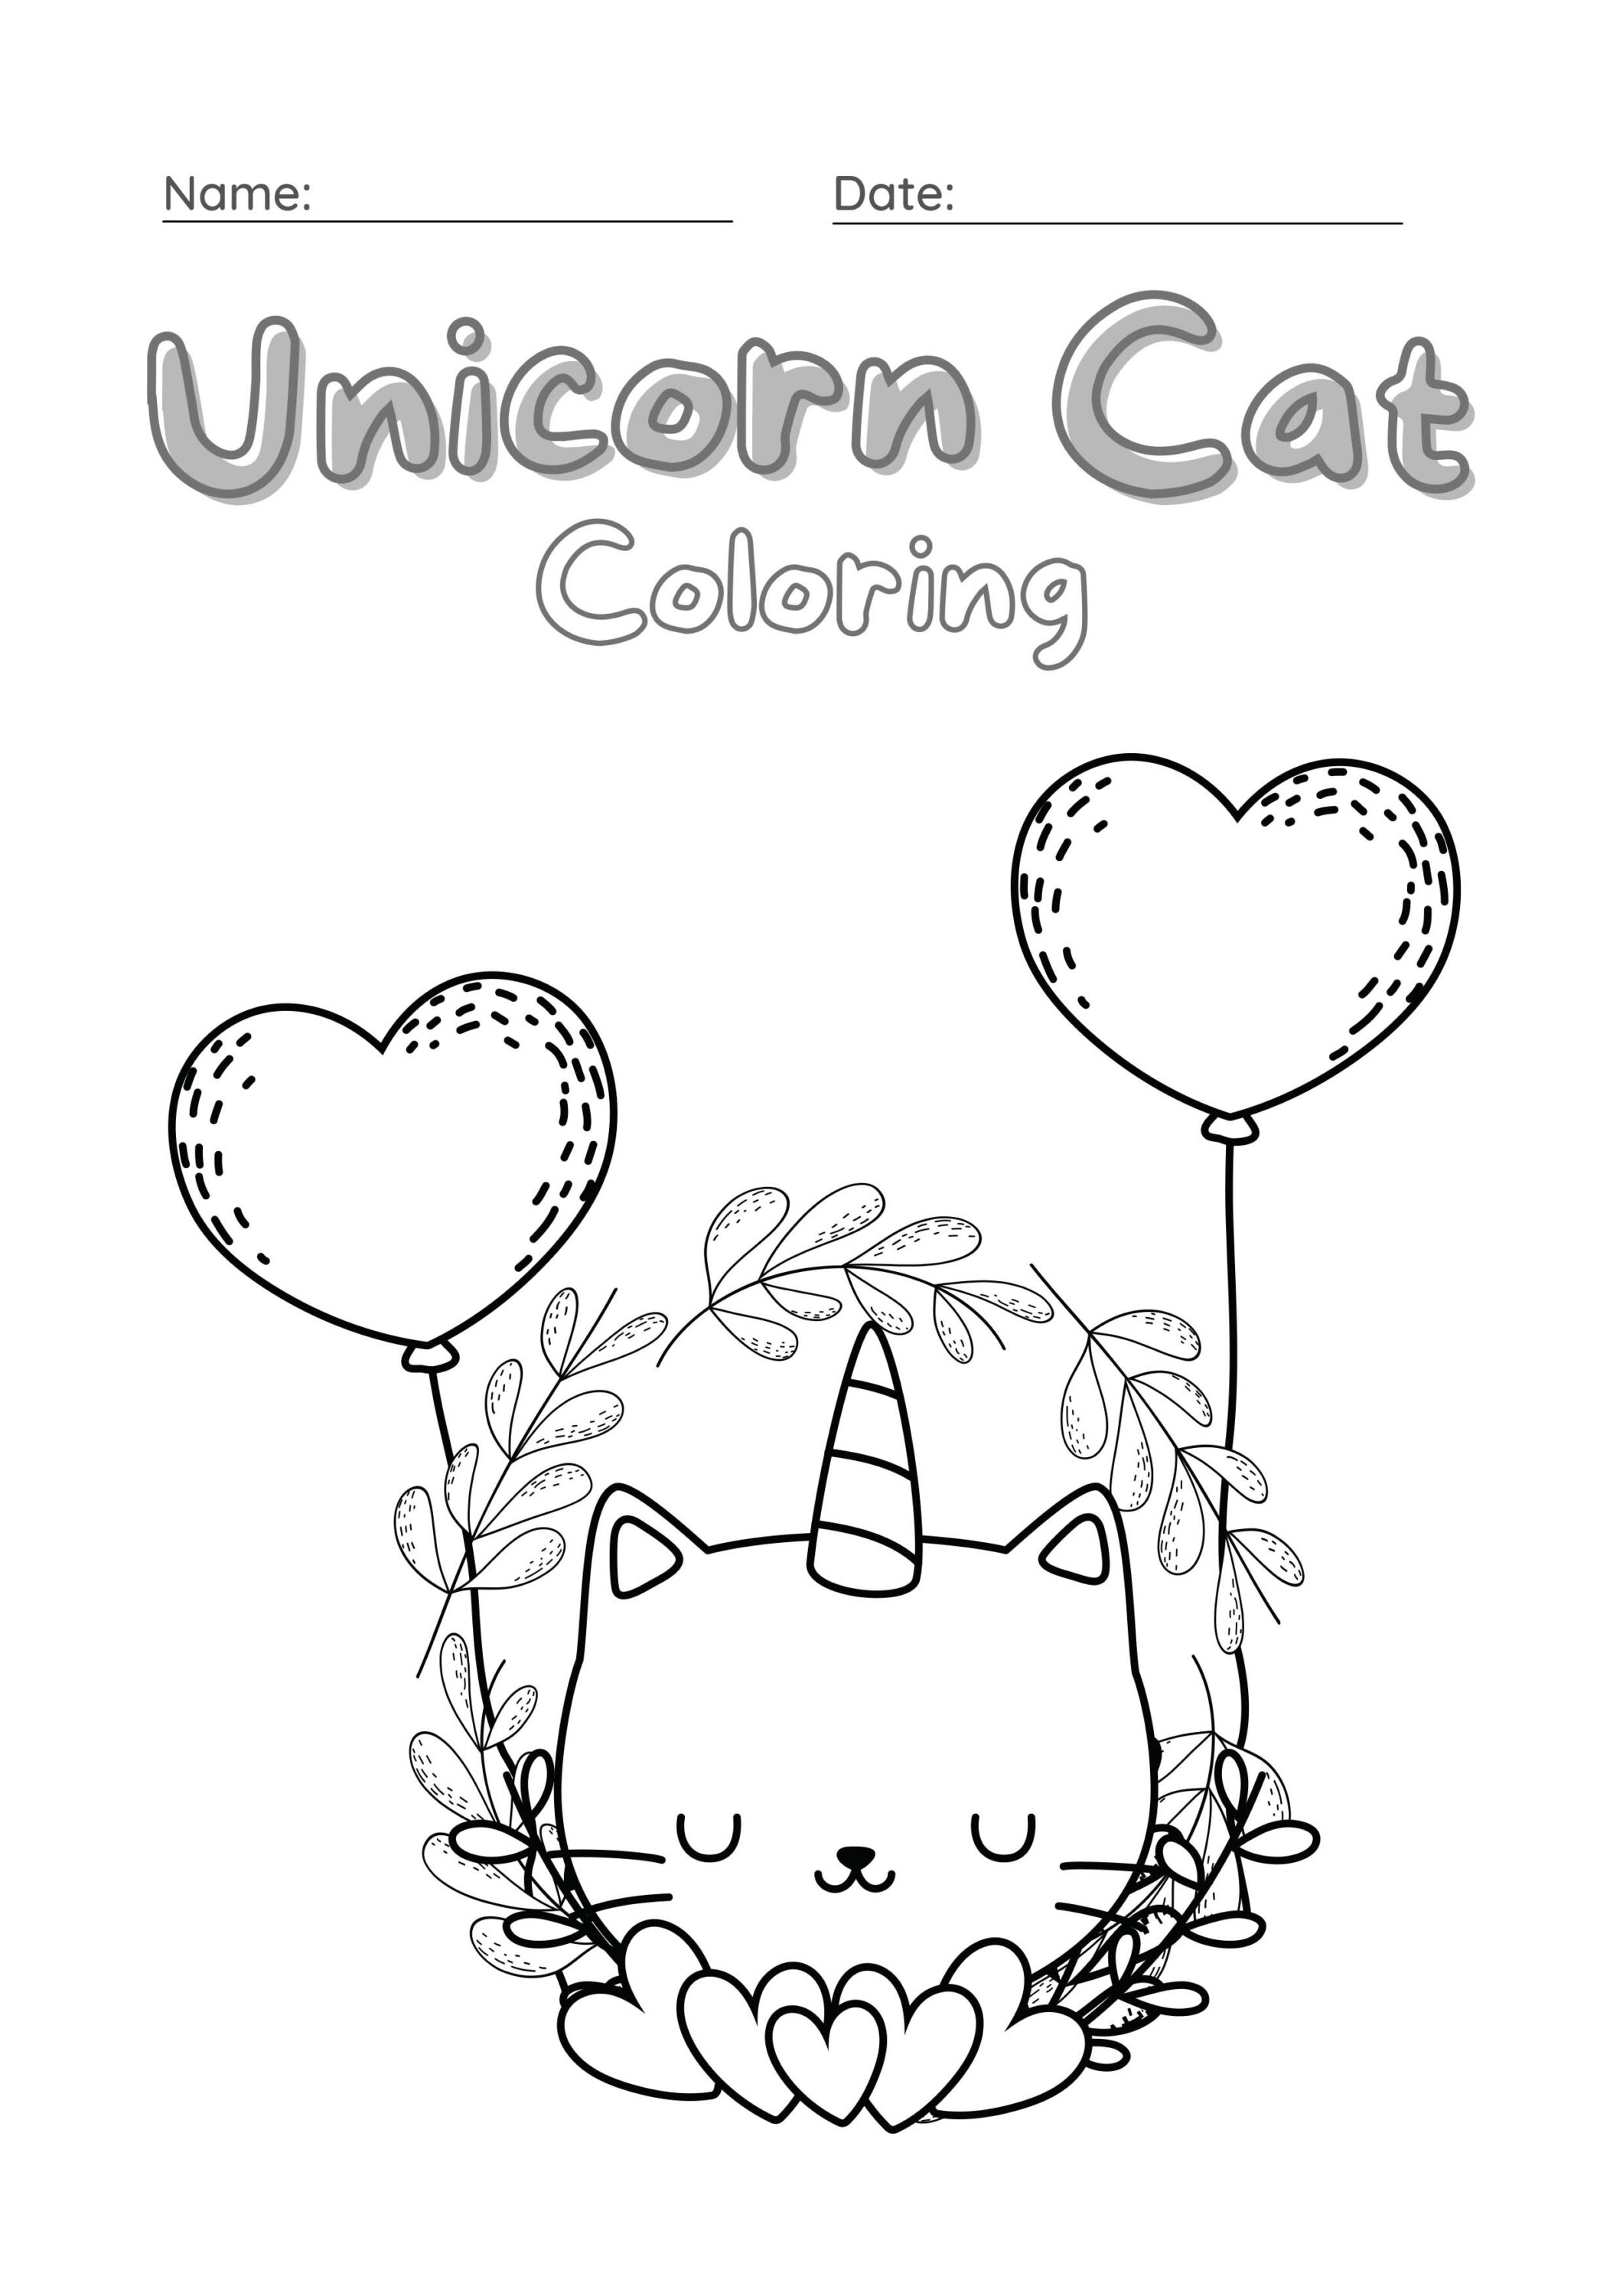 Unicorn Cat Coloring Worksheet Set 16